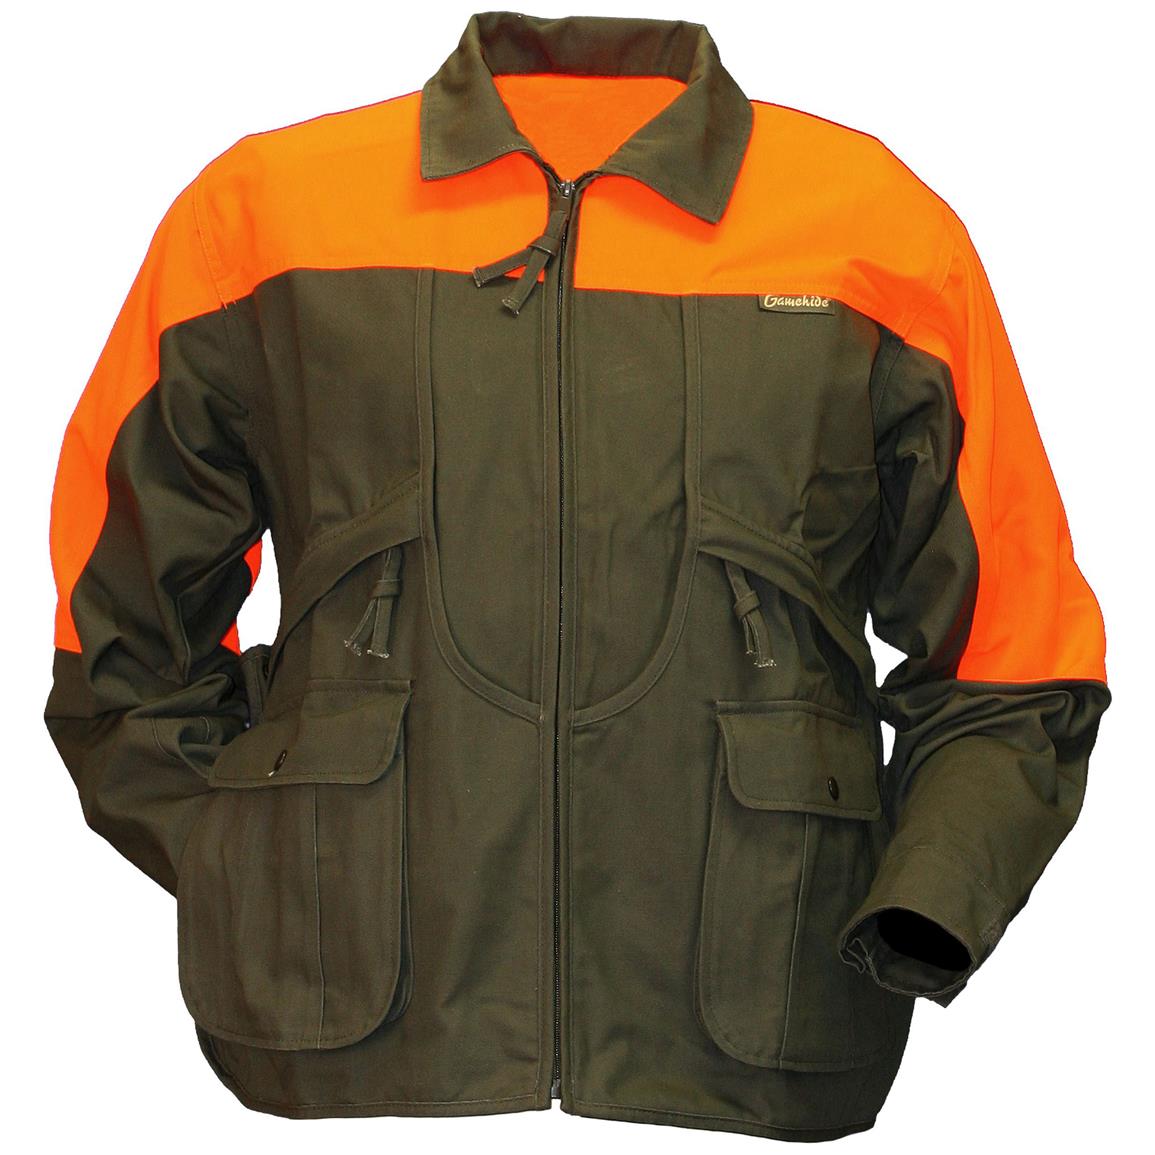 Gamehide Rooster Upland Jacket - 621893, Blaze Orange & Blaze Camo at ...